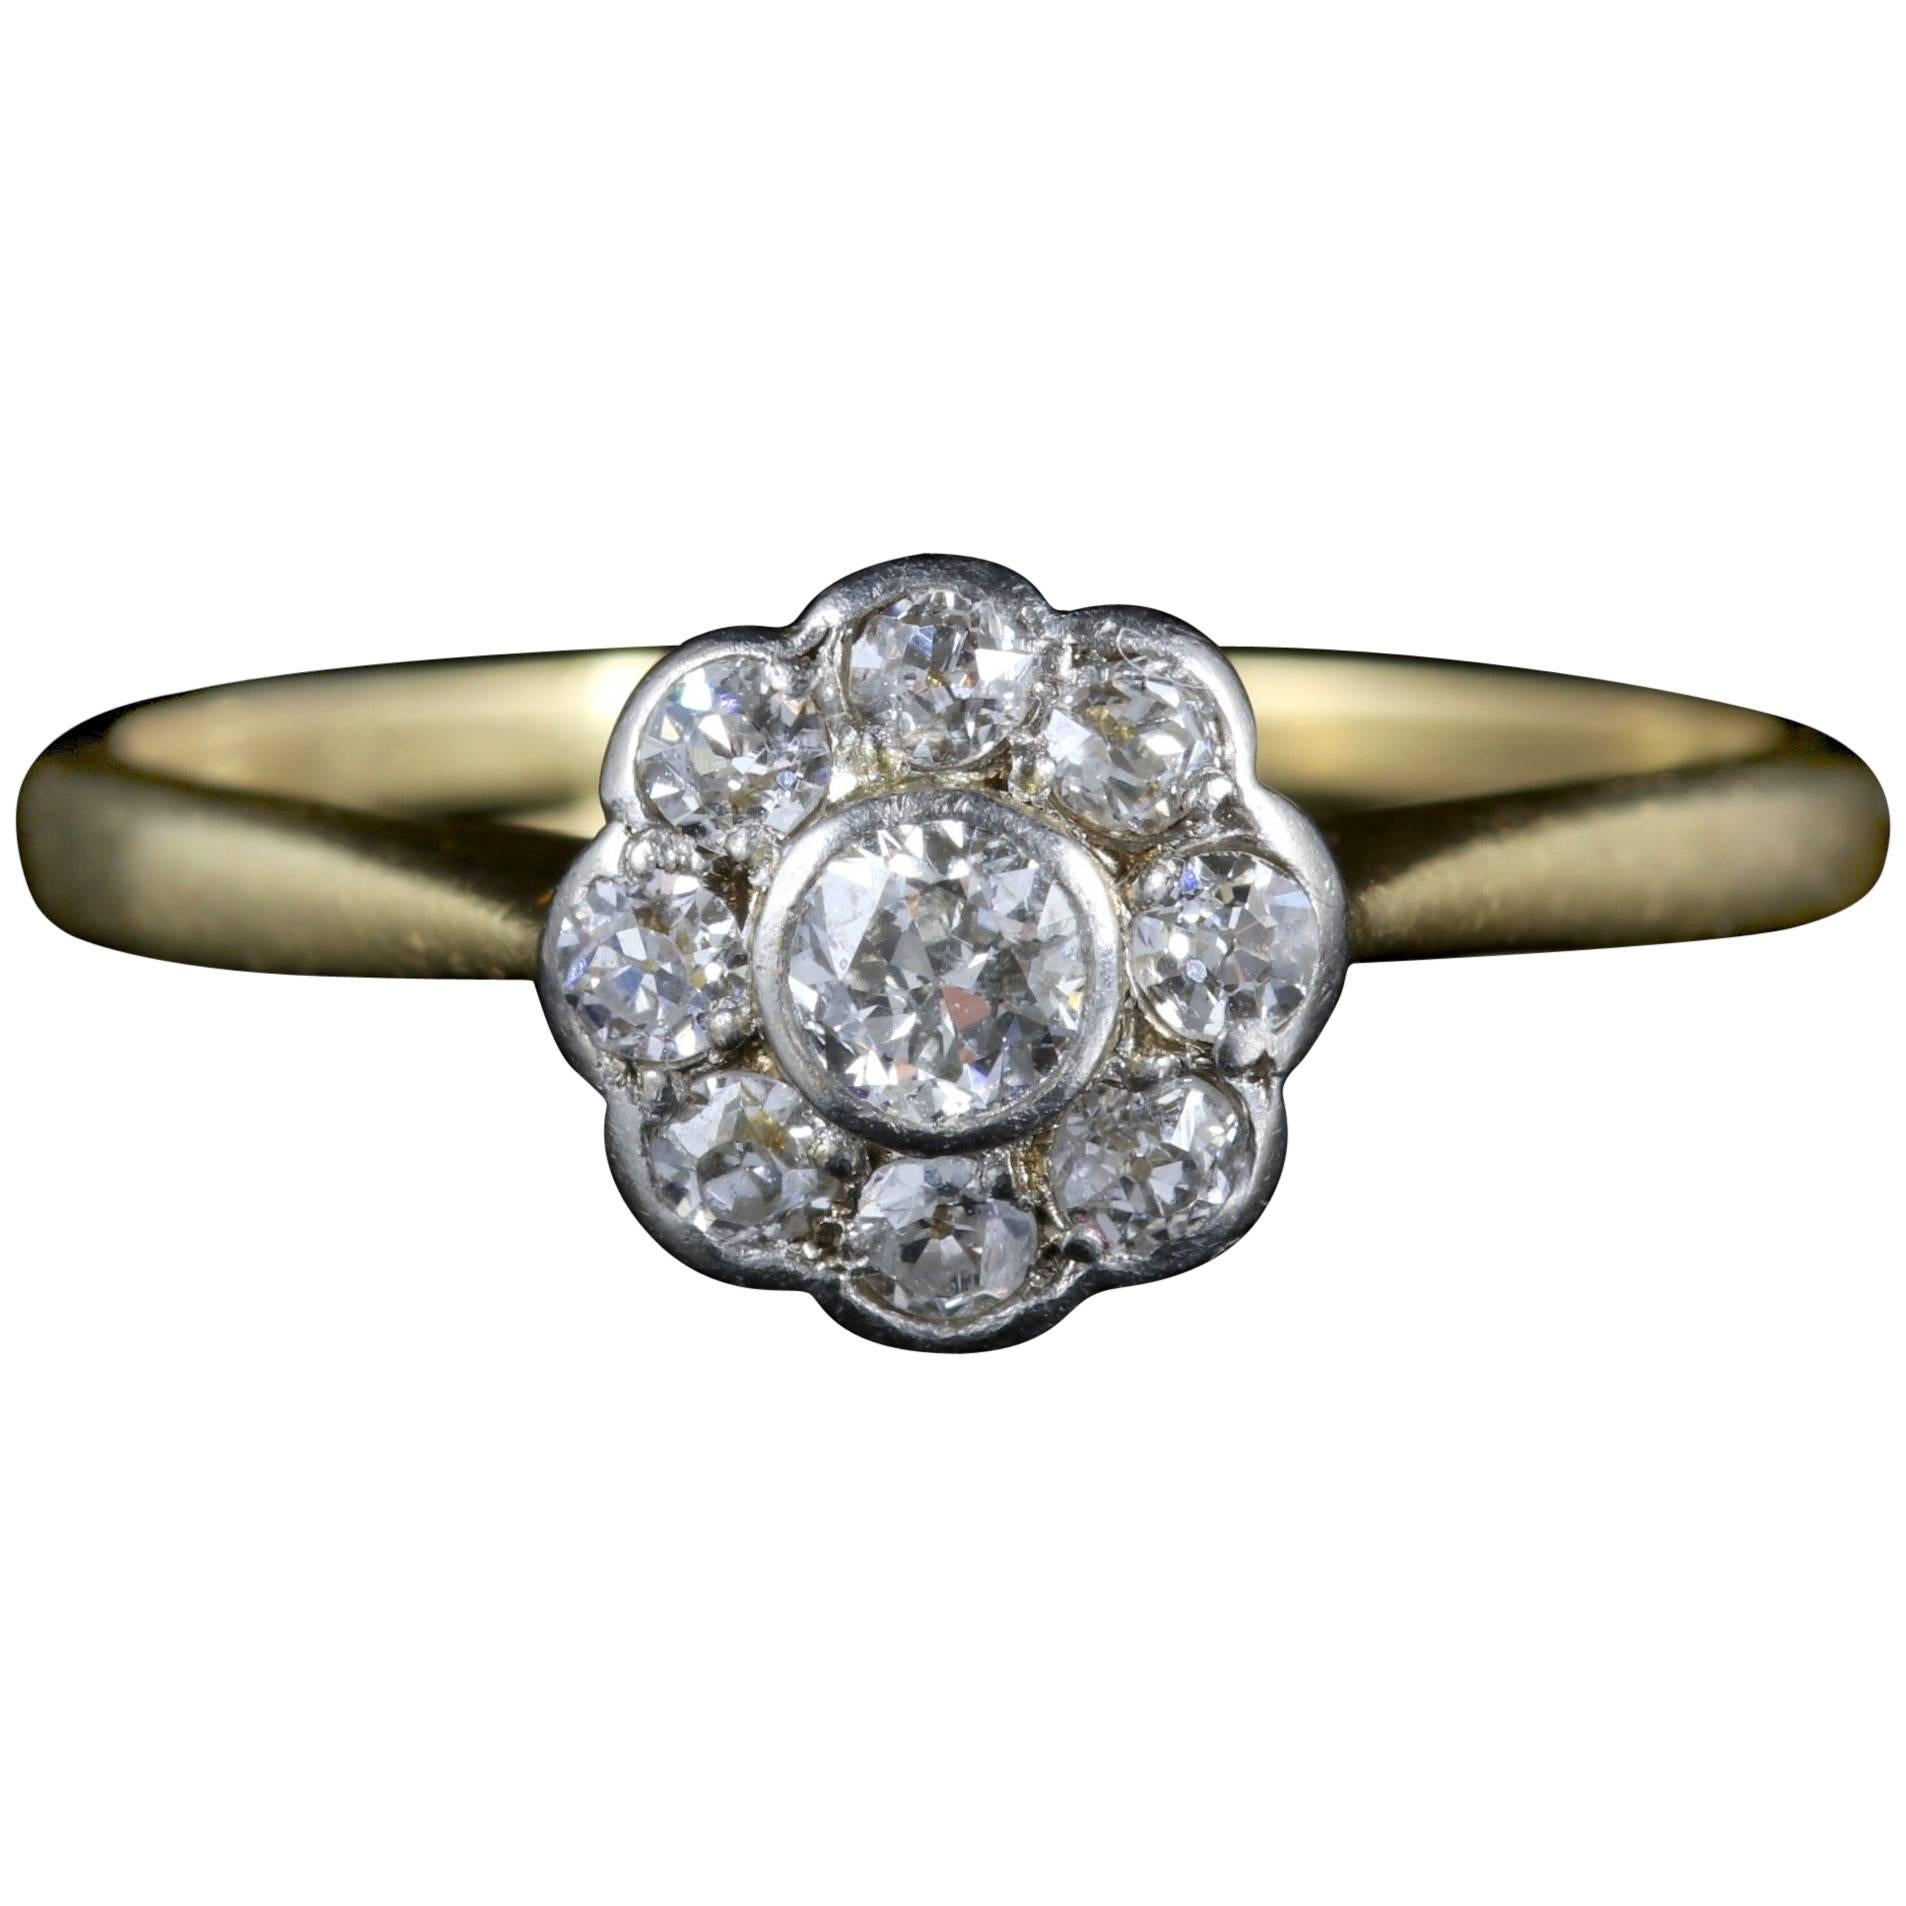 Antique Edwardian Diamond Cluster Ring 18 Carat Gold, circa 1910